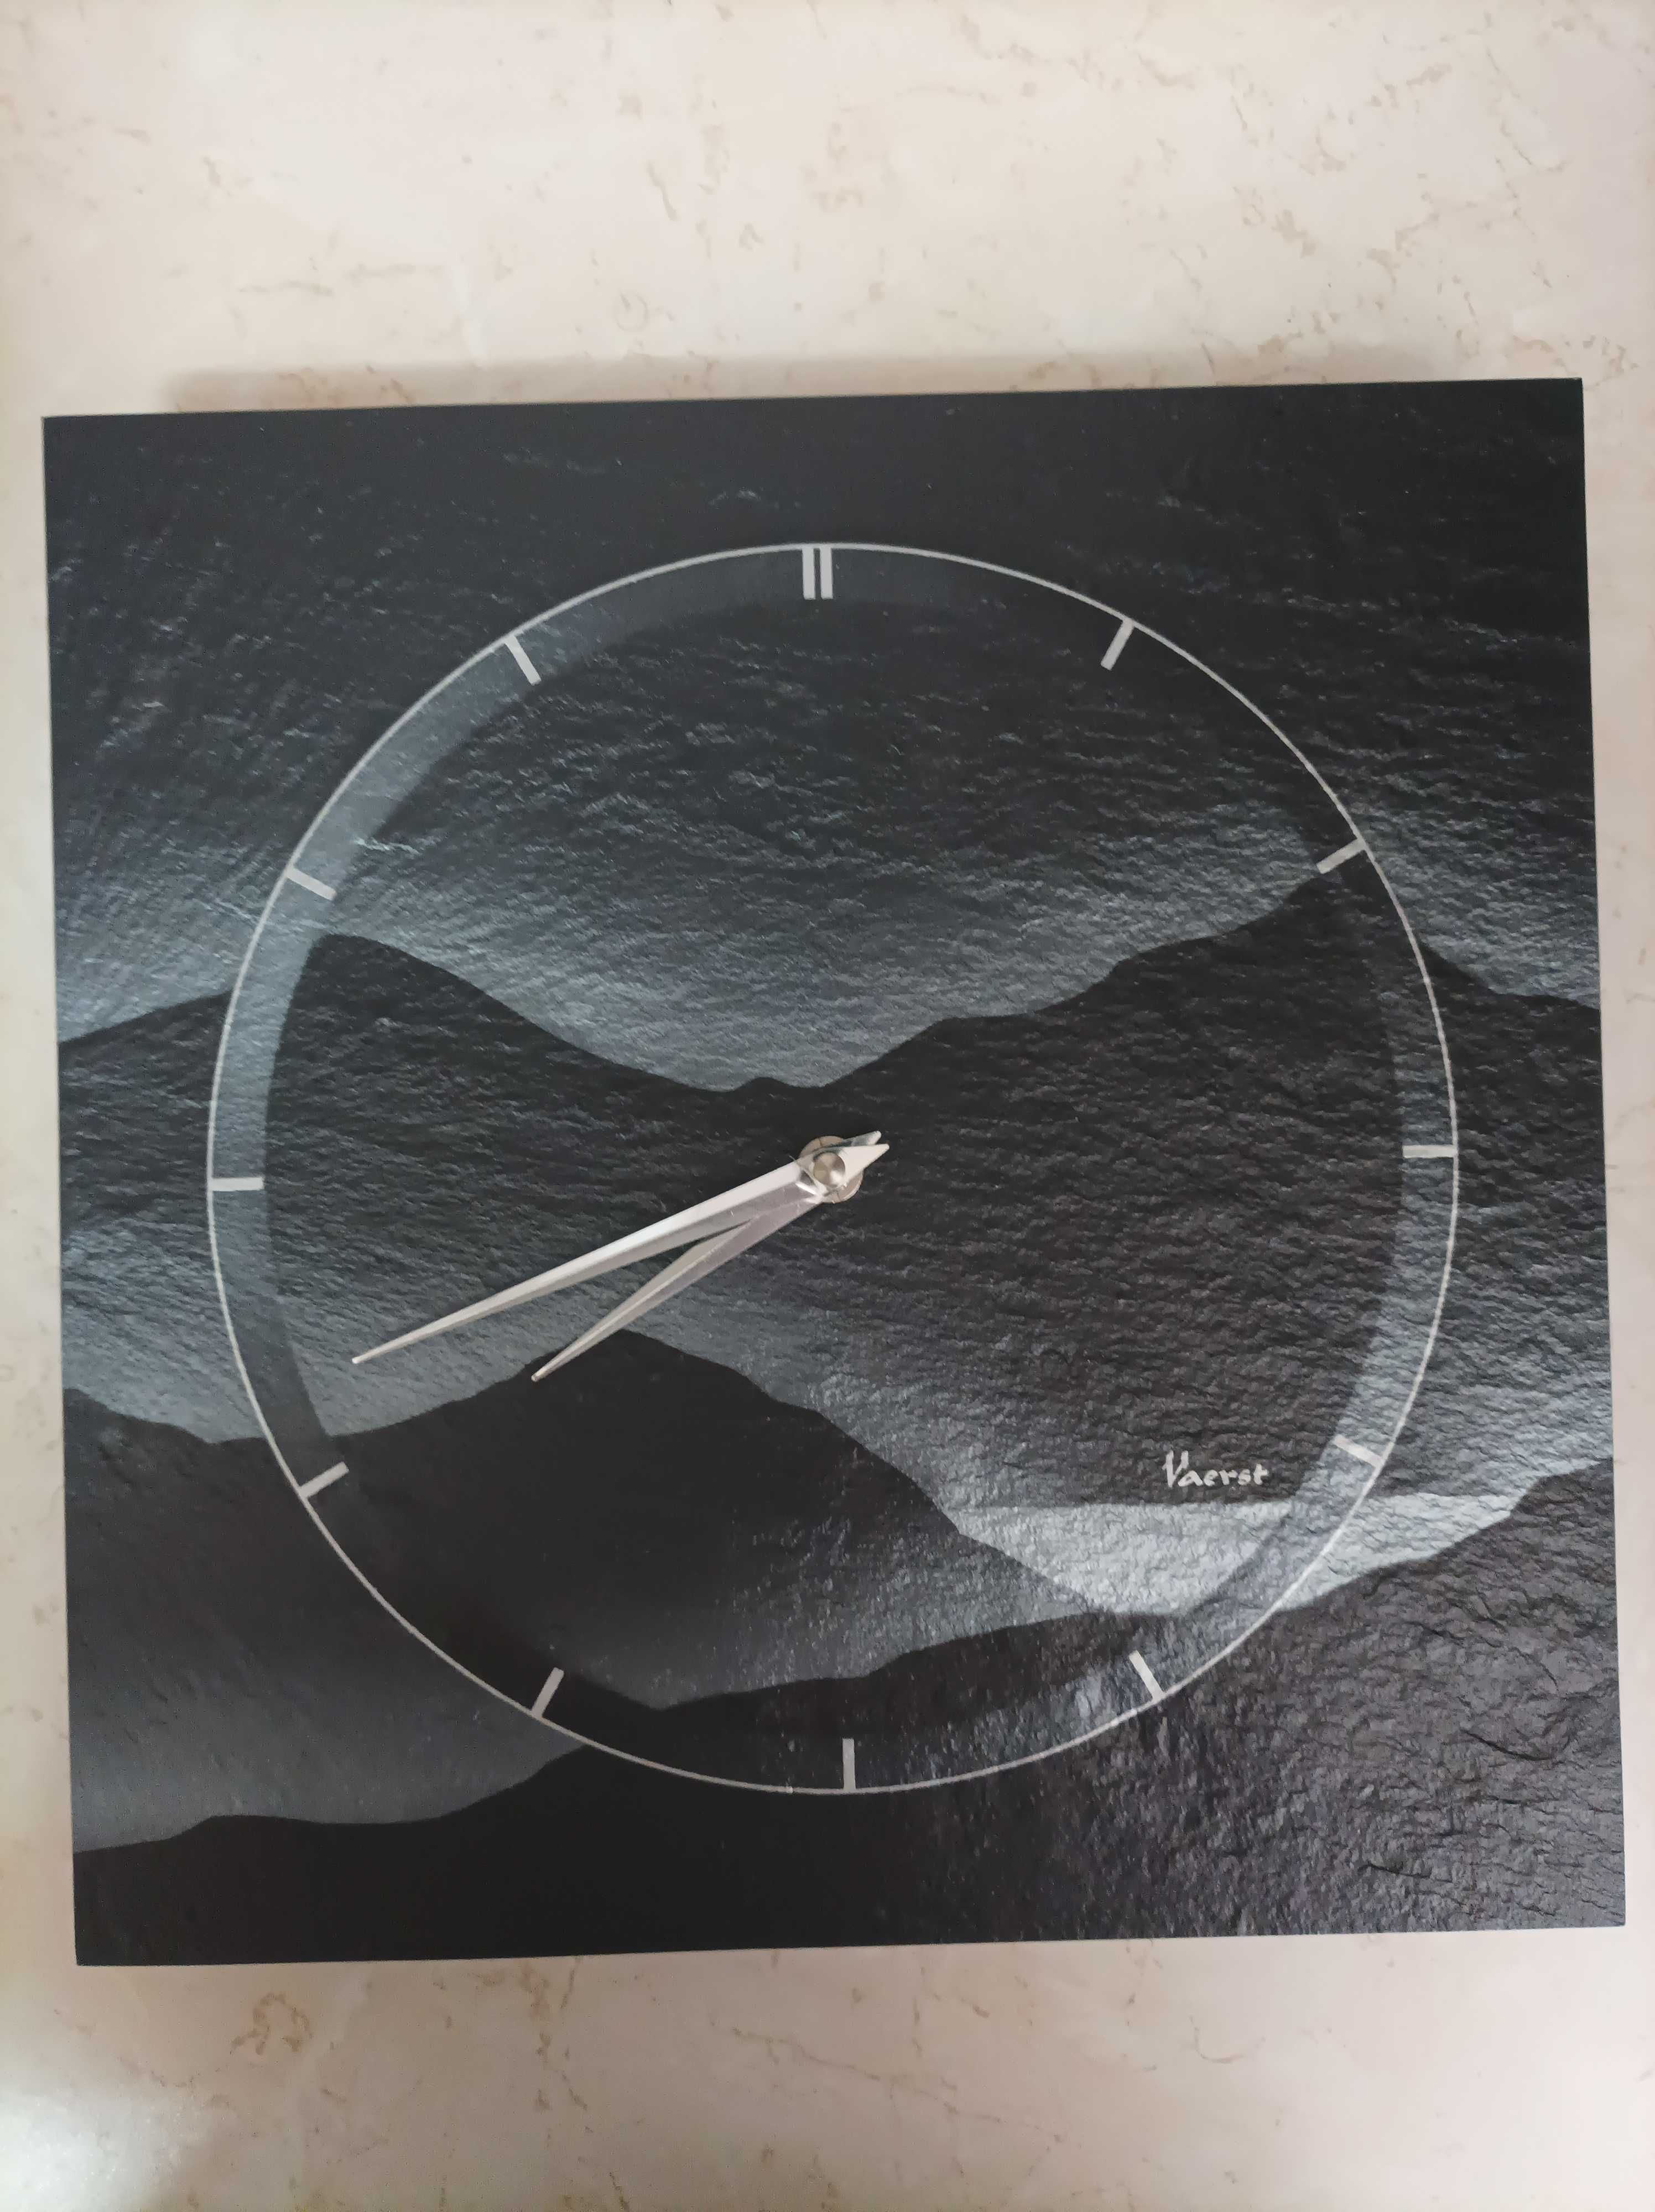 Unicat ceas de perete Junghans-Vaerst.Made in Germany.Livrare OLX